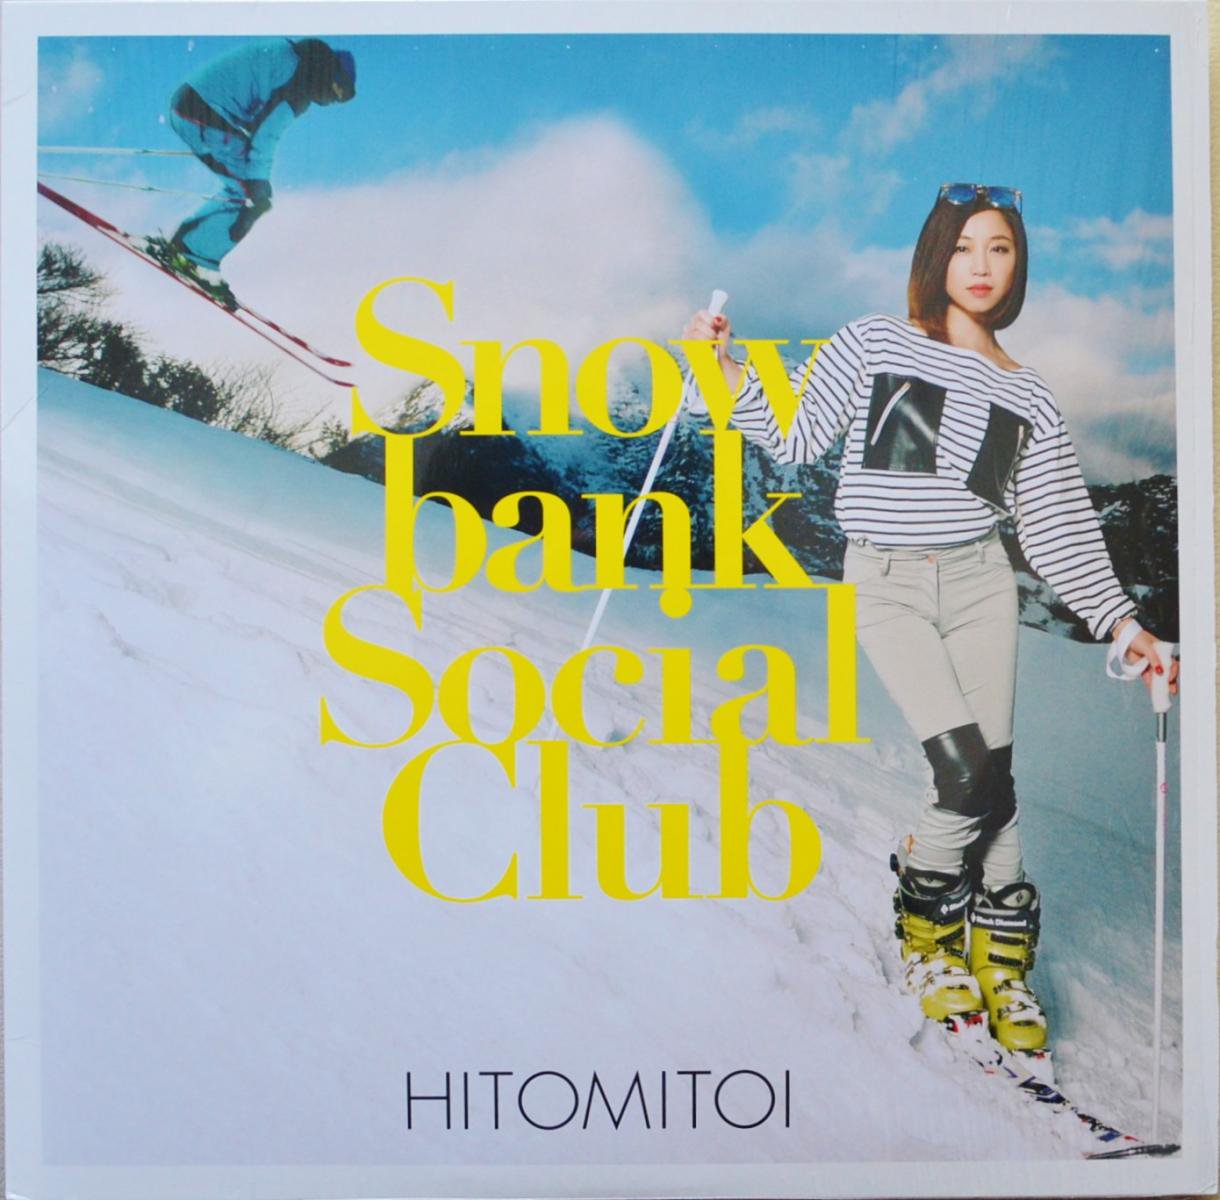 一十三十一 (HITOMITOI) / SNOWBANK SOCIAL CLUB (LP+7